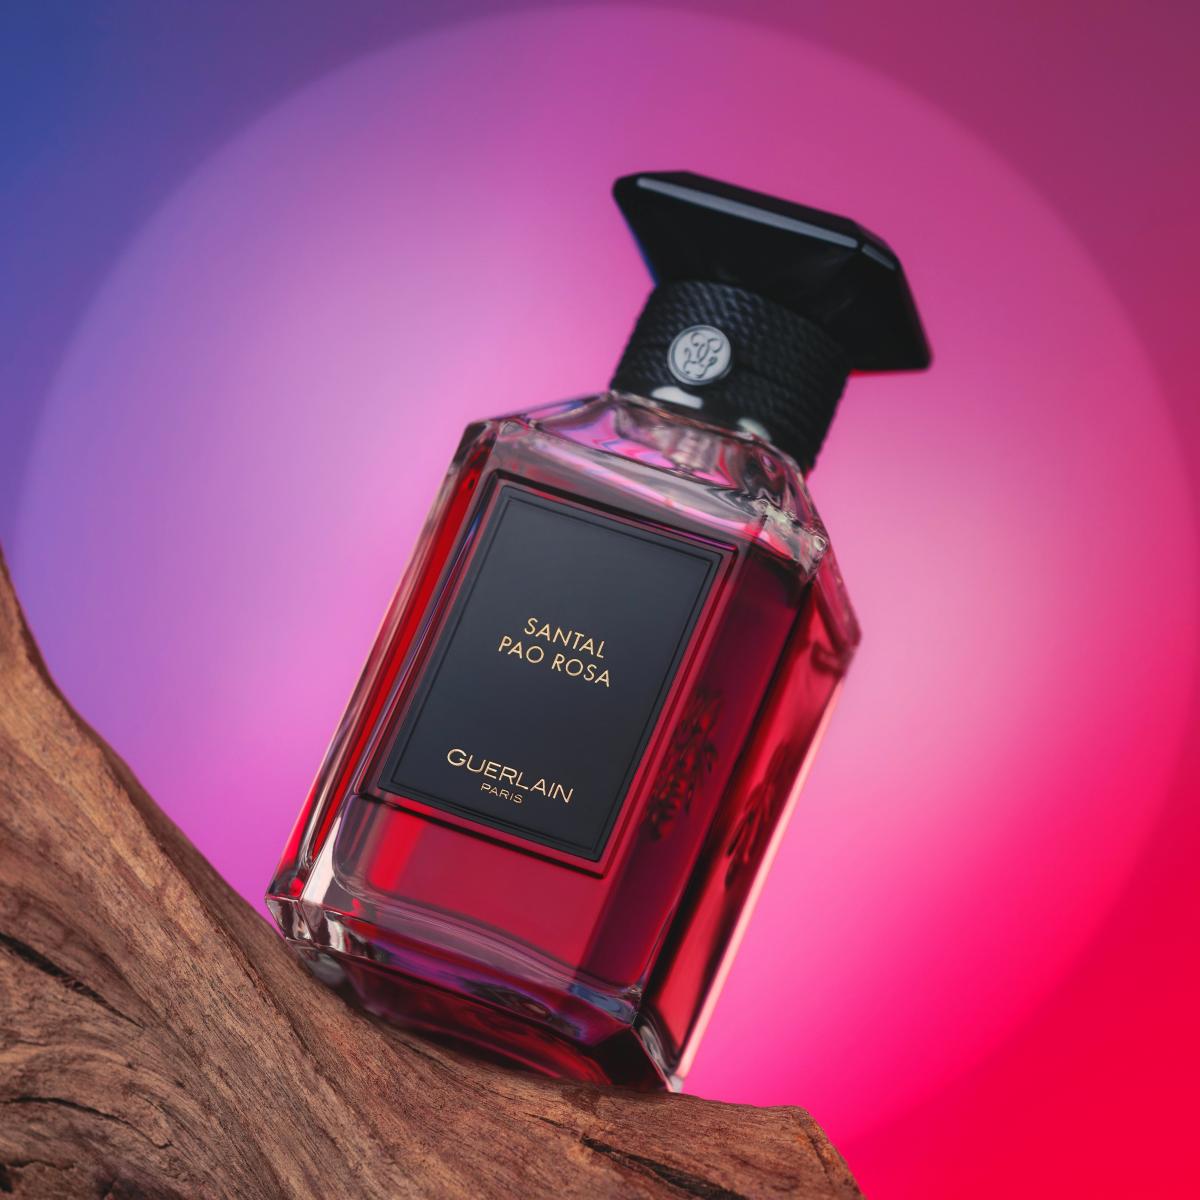 Santal Pao Rosa Guerlain perfume - a fragrance for women and men 2021